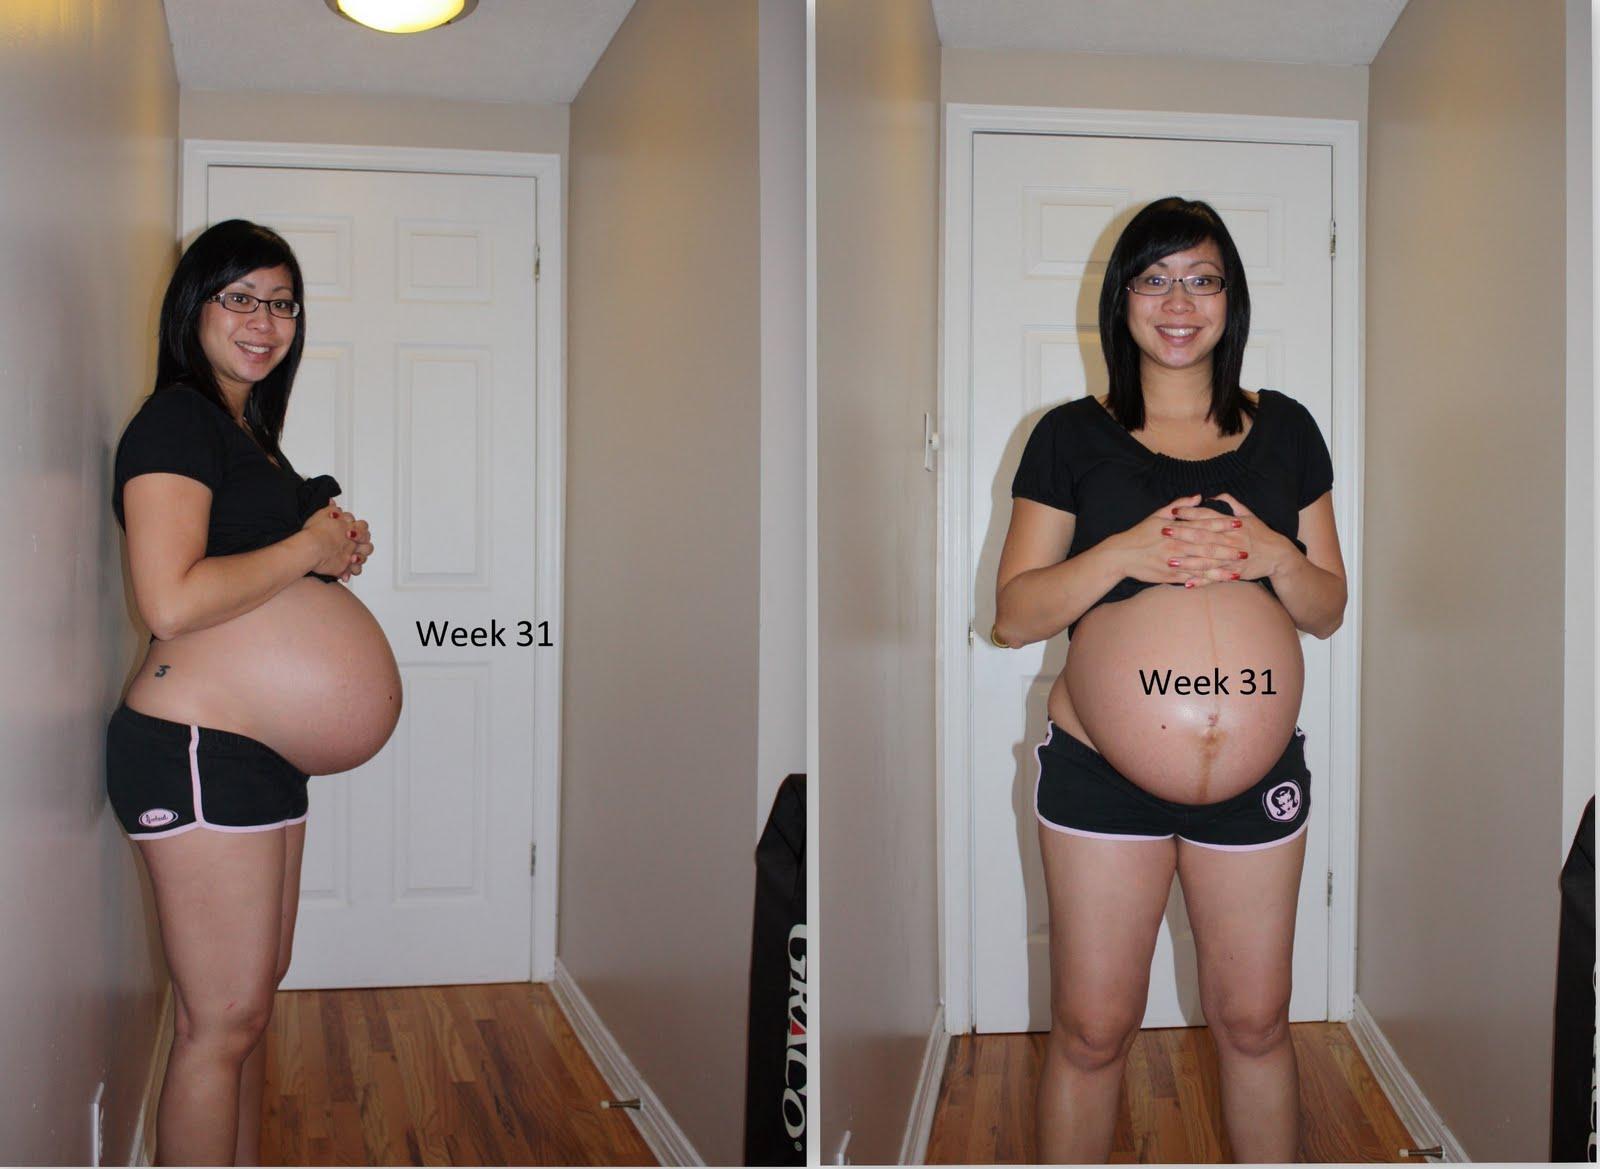 How Big Is Baby at 8 Weeks?